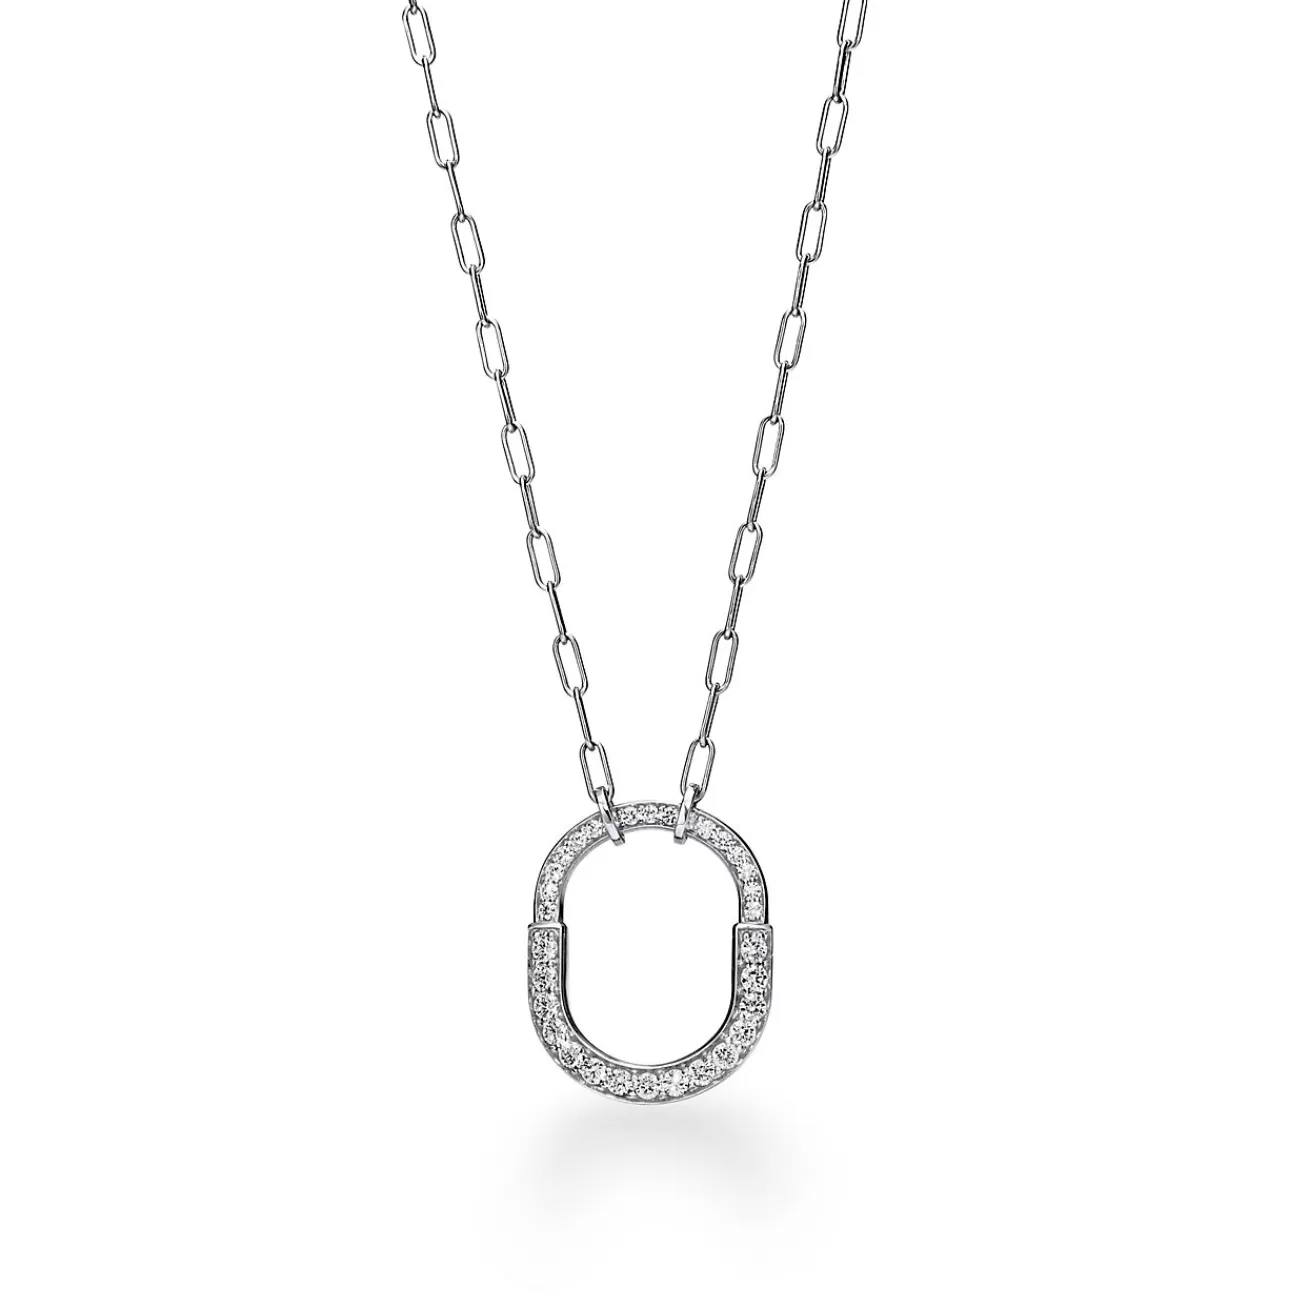 Tiffany & Co. Tiffany Lock Pendant in White Gold with Pavé Diamonds, Medium | ^ Necklaces & Pendants | Diamond Jewelry